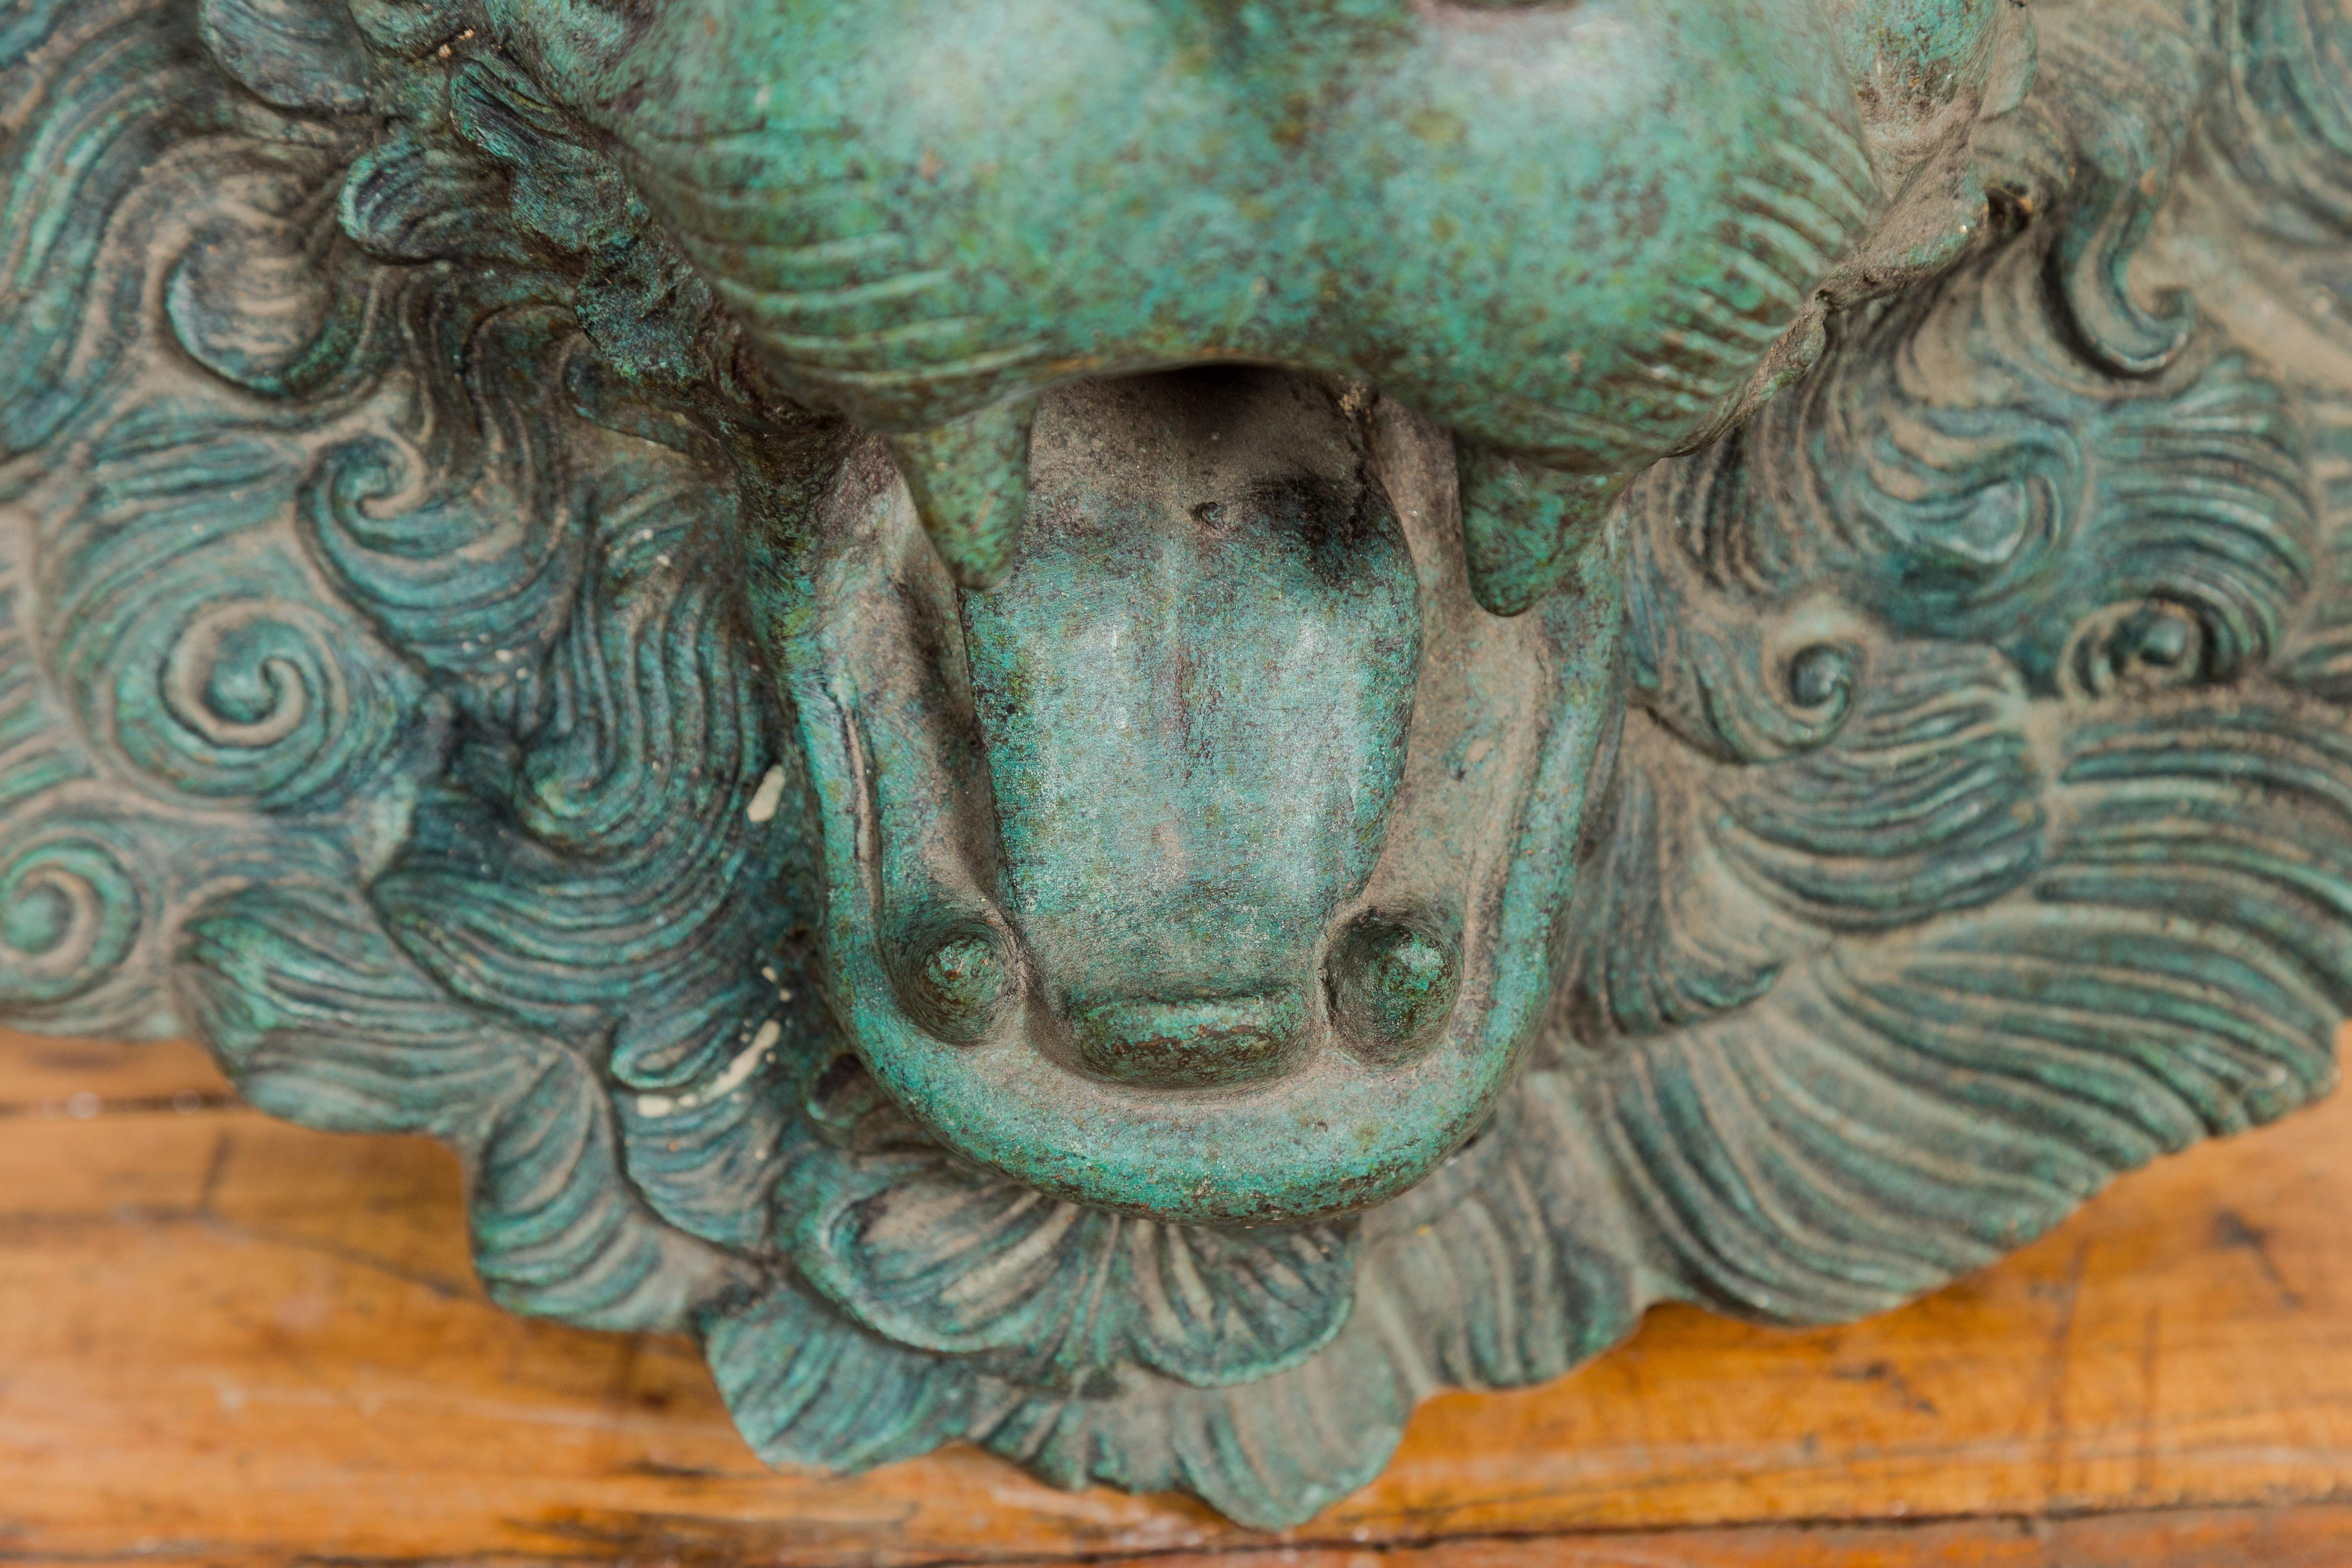 Heraldic Cast Bronze Lion Head Sculpture Tubed as a Fountain, Verdigris Patina 7